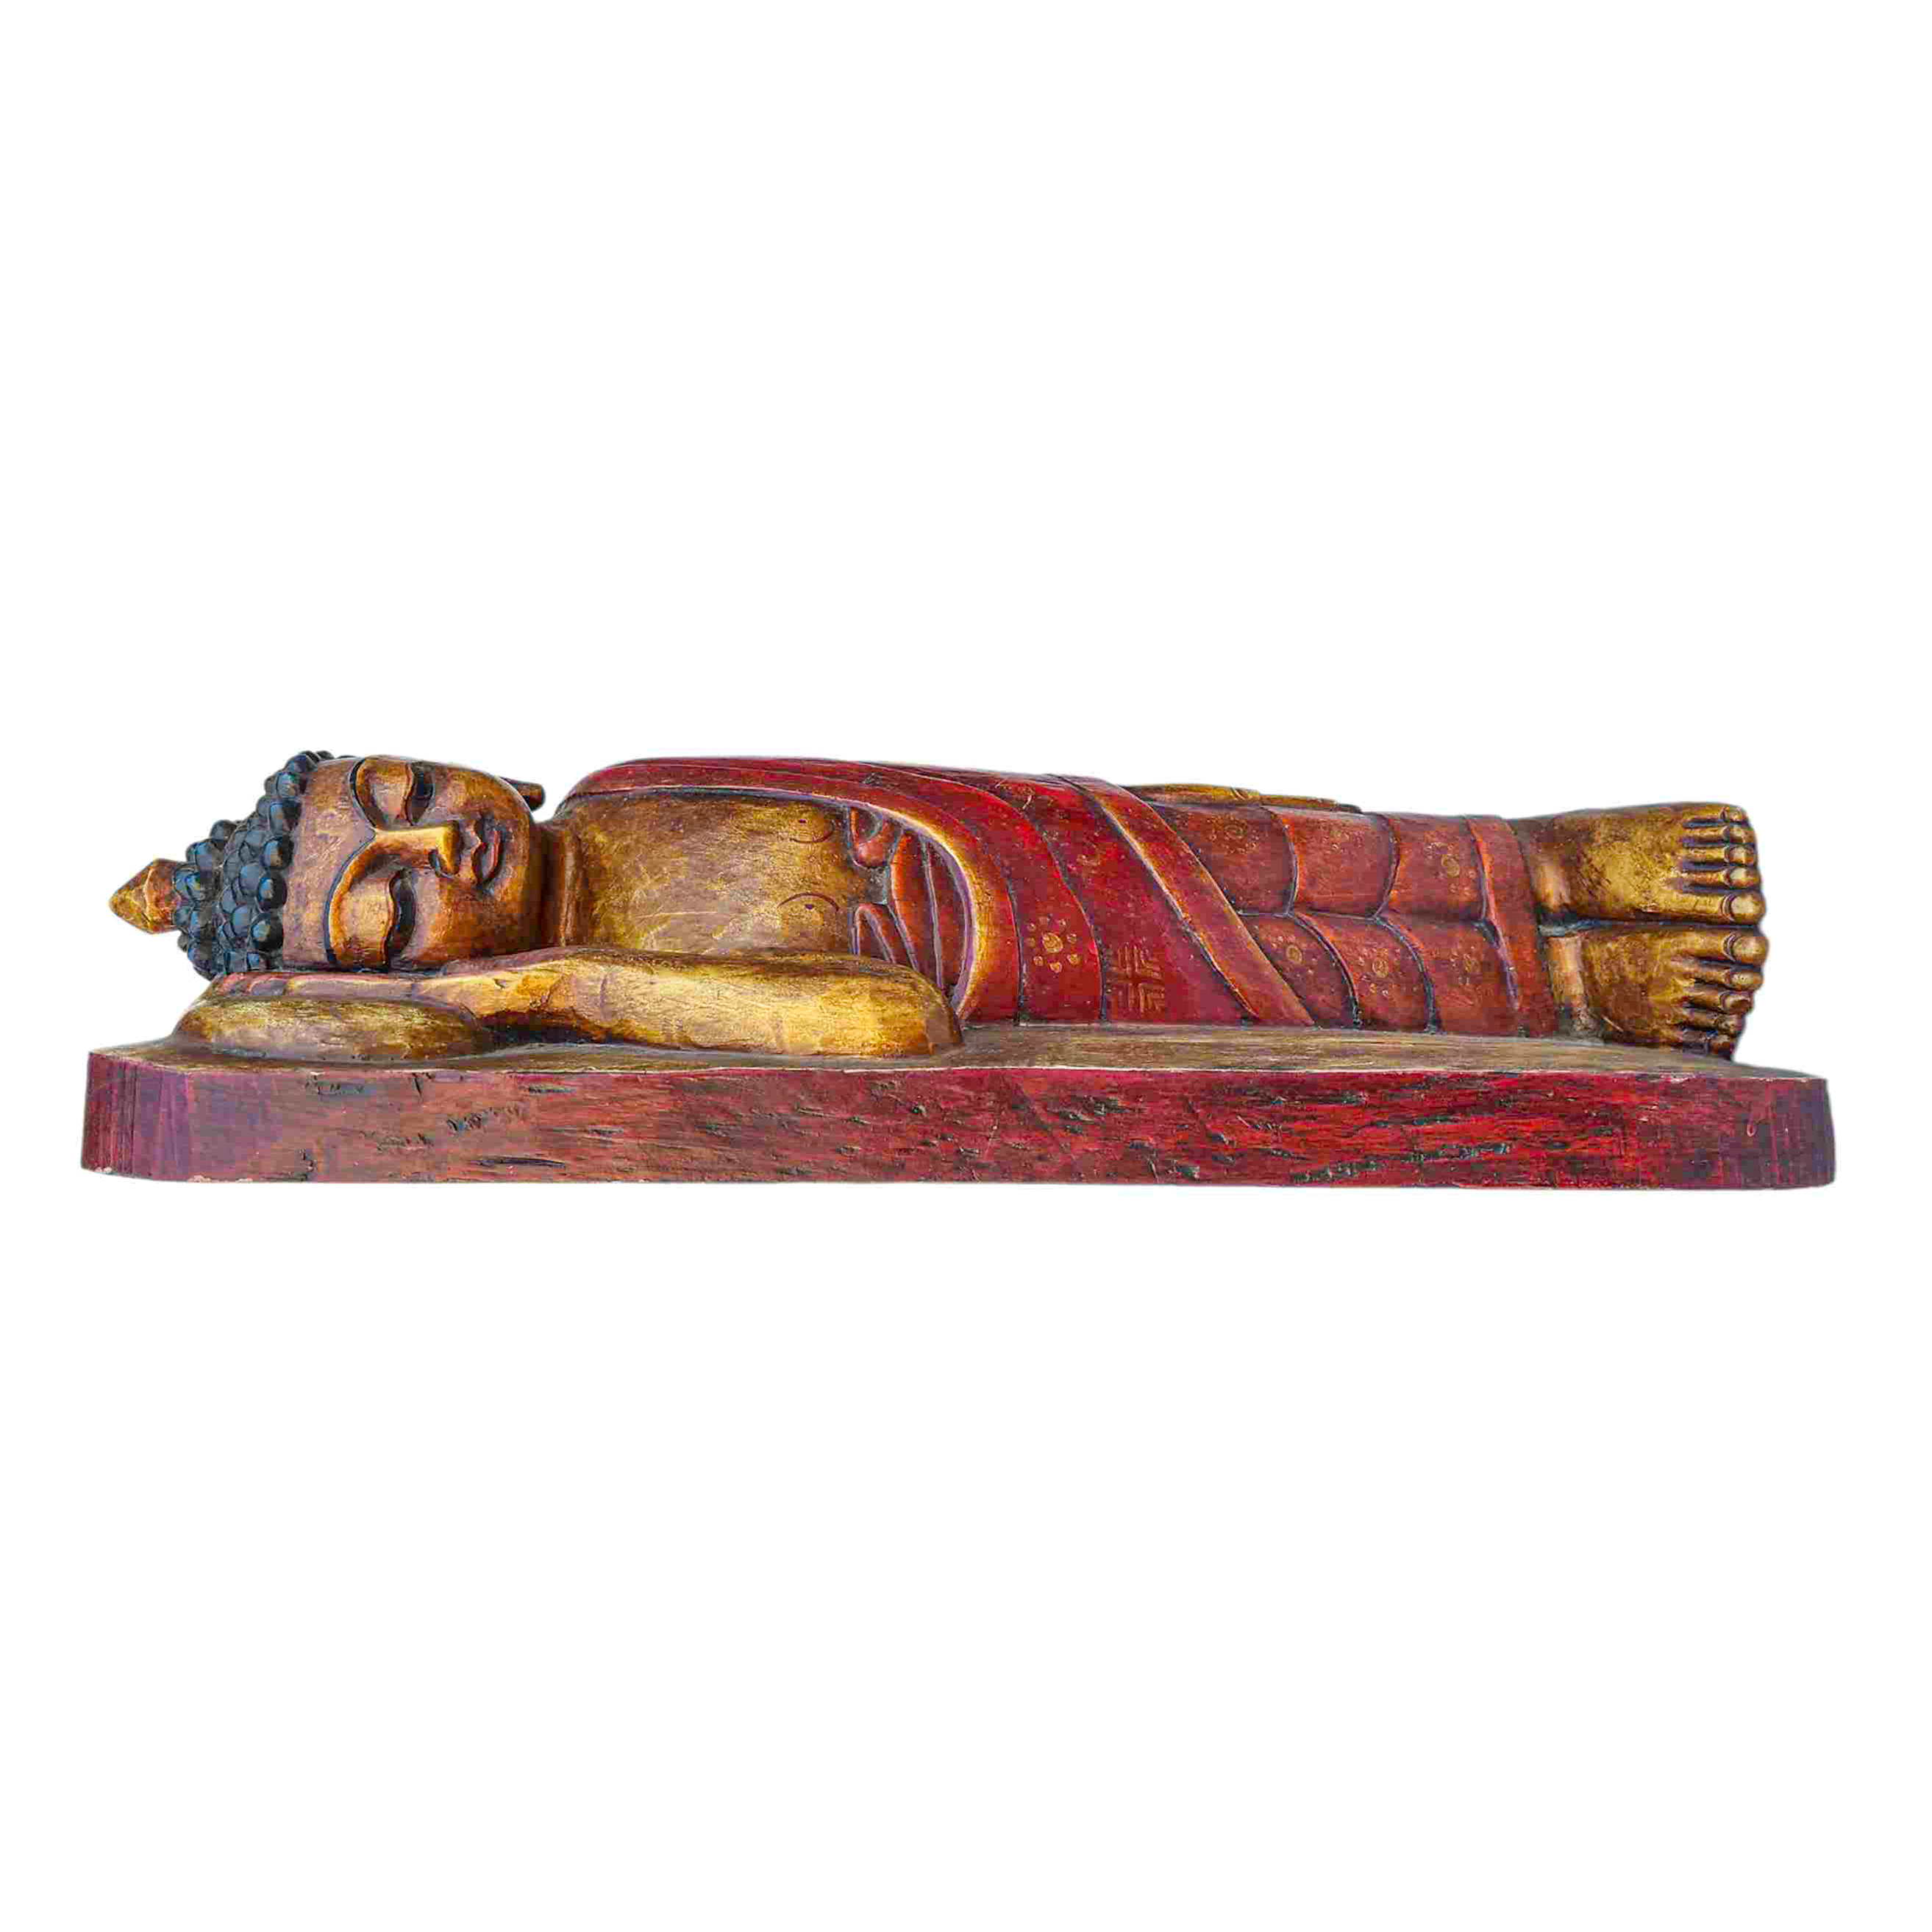 Buddhist Handmade Wooden Statue Of Sleeping Buddha, painted